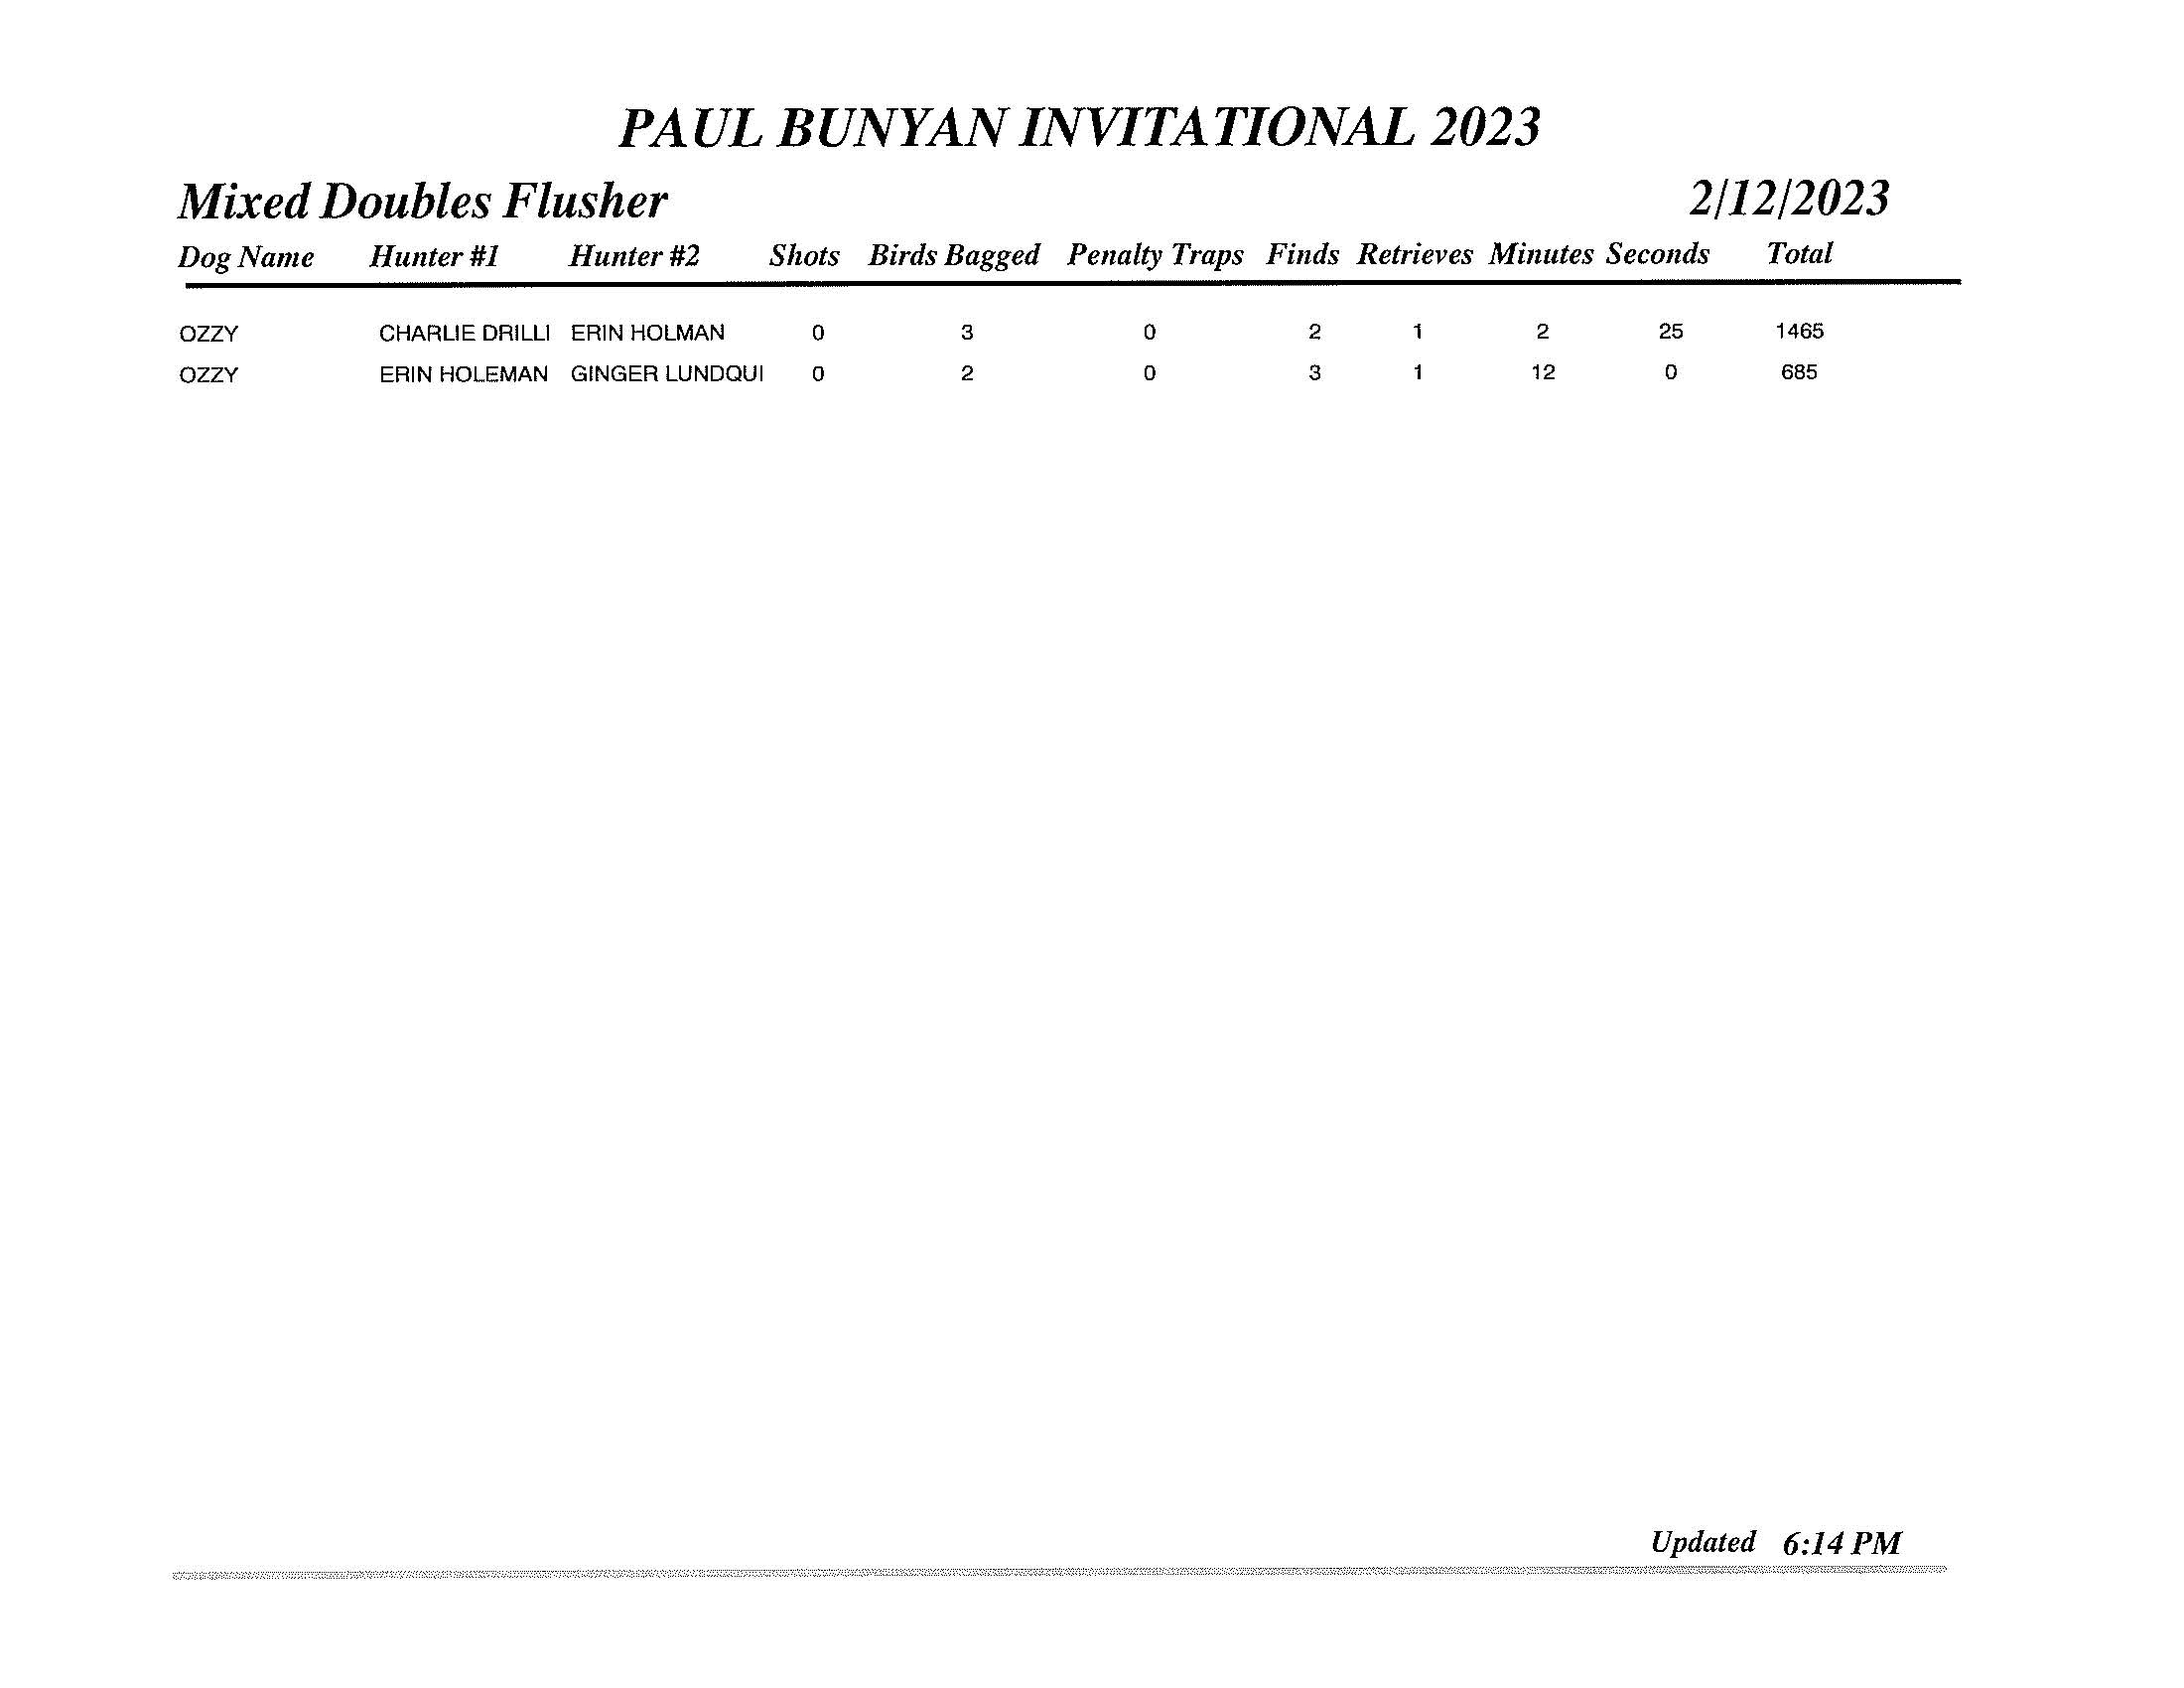 GDC Paul Bunyan Final 2023 (6)